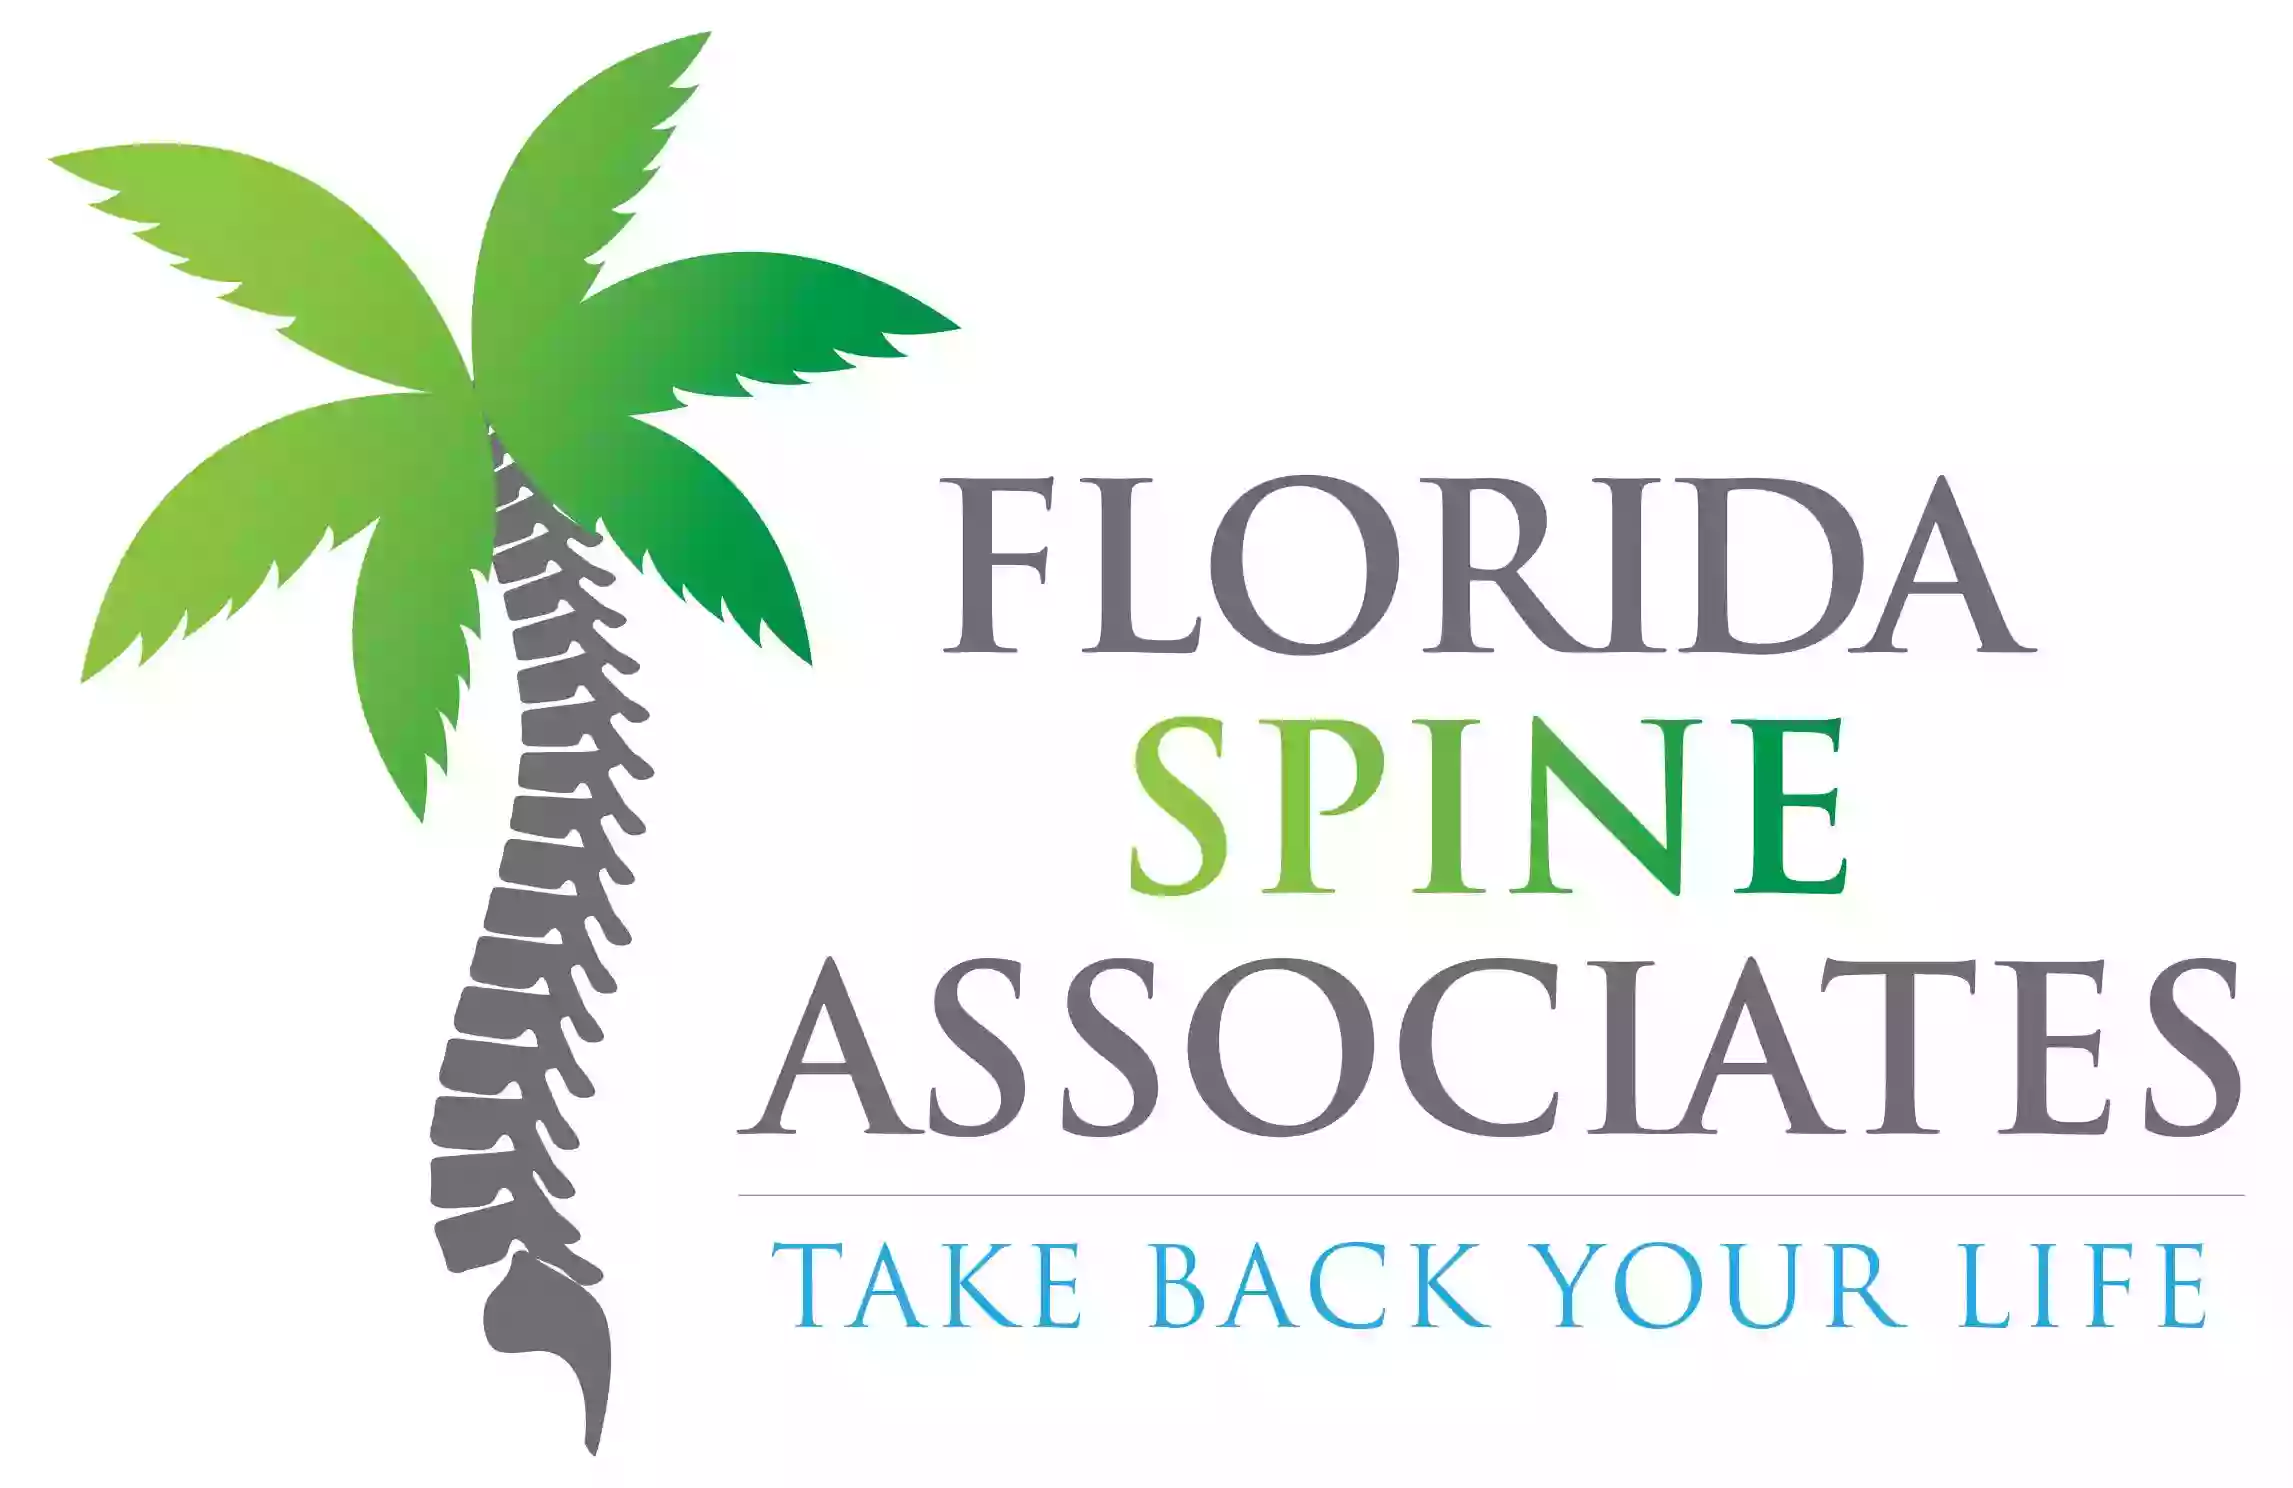 Florida Spine Associates